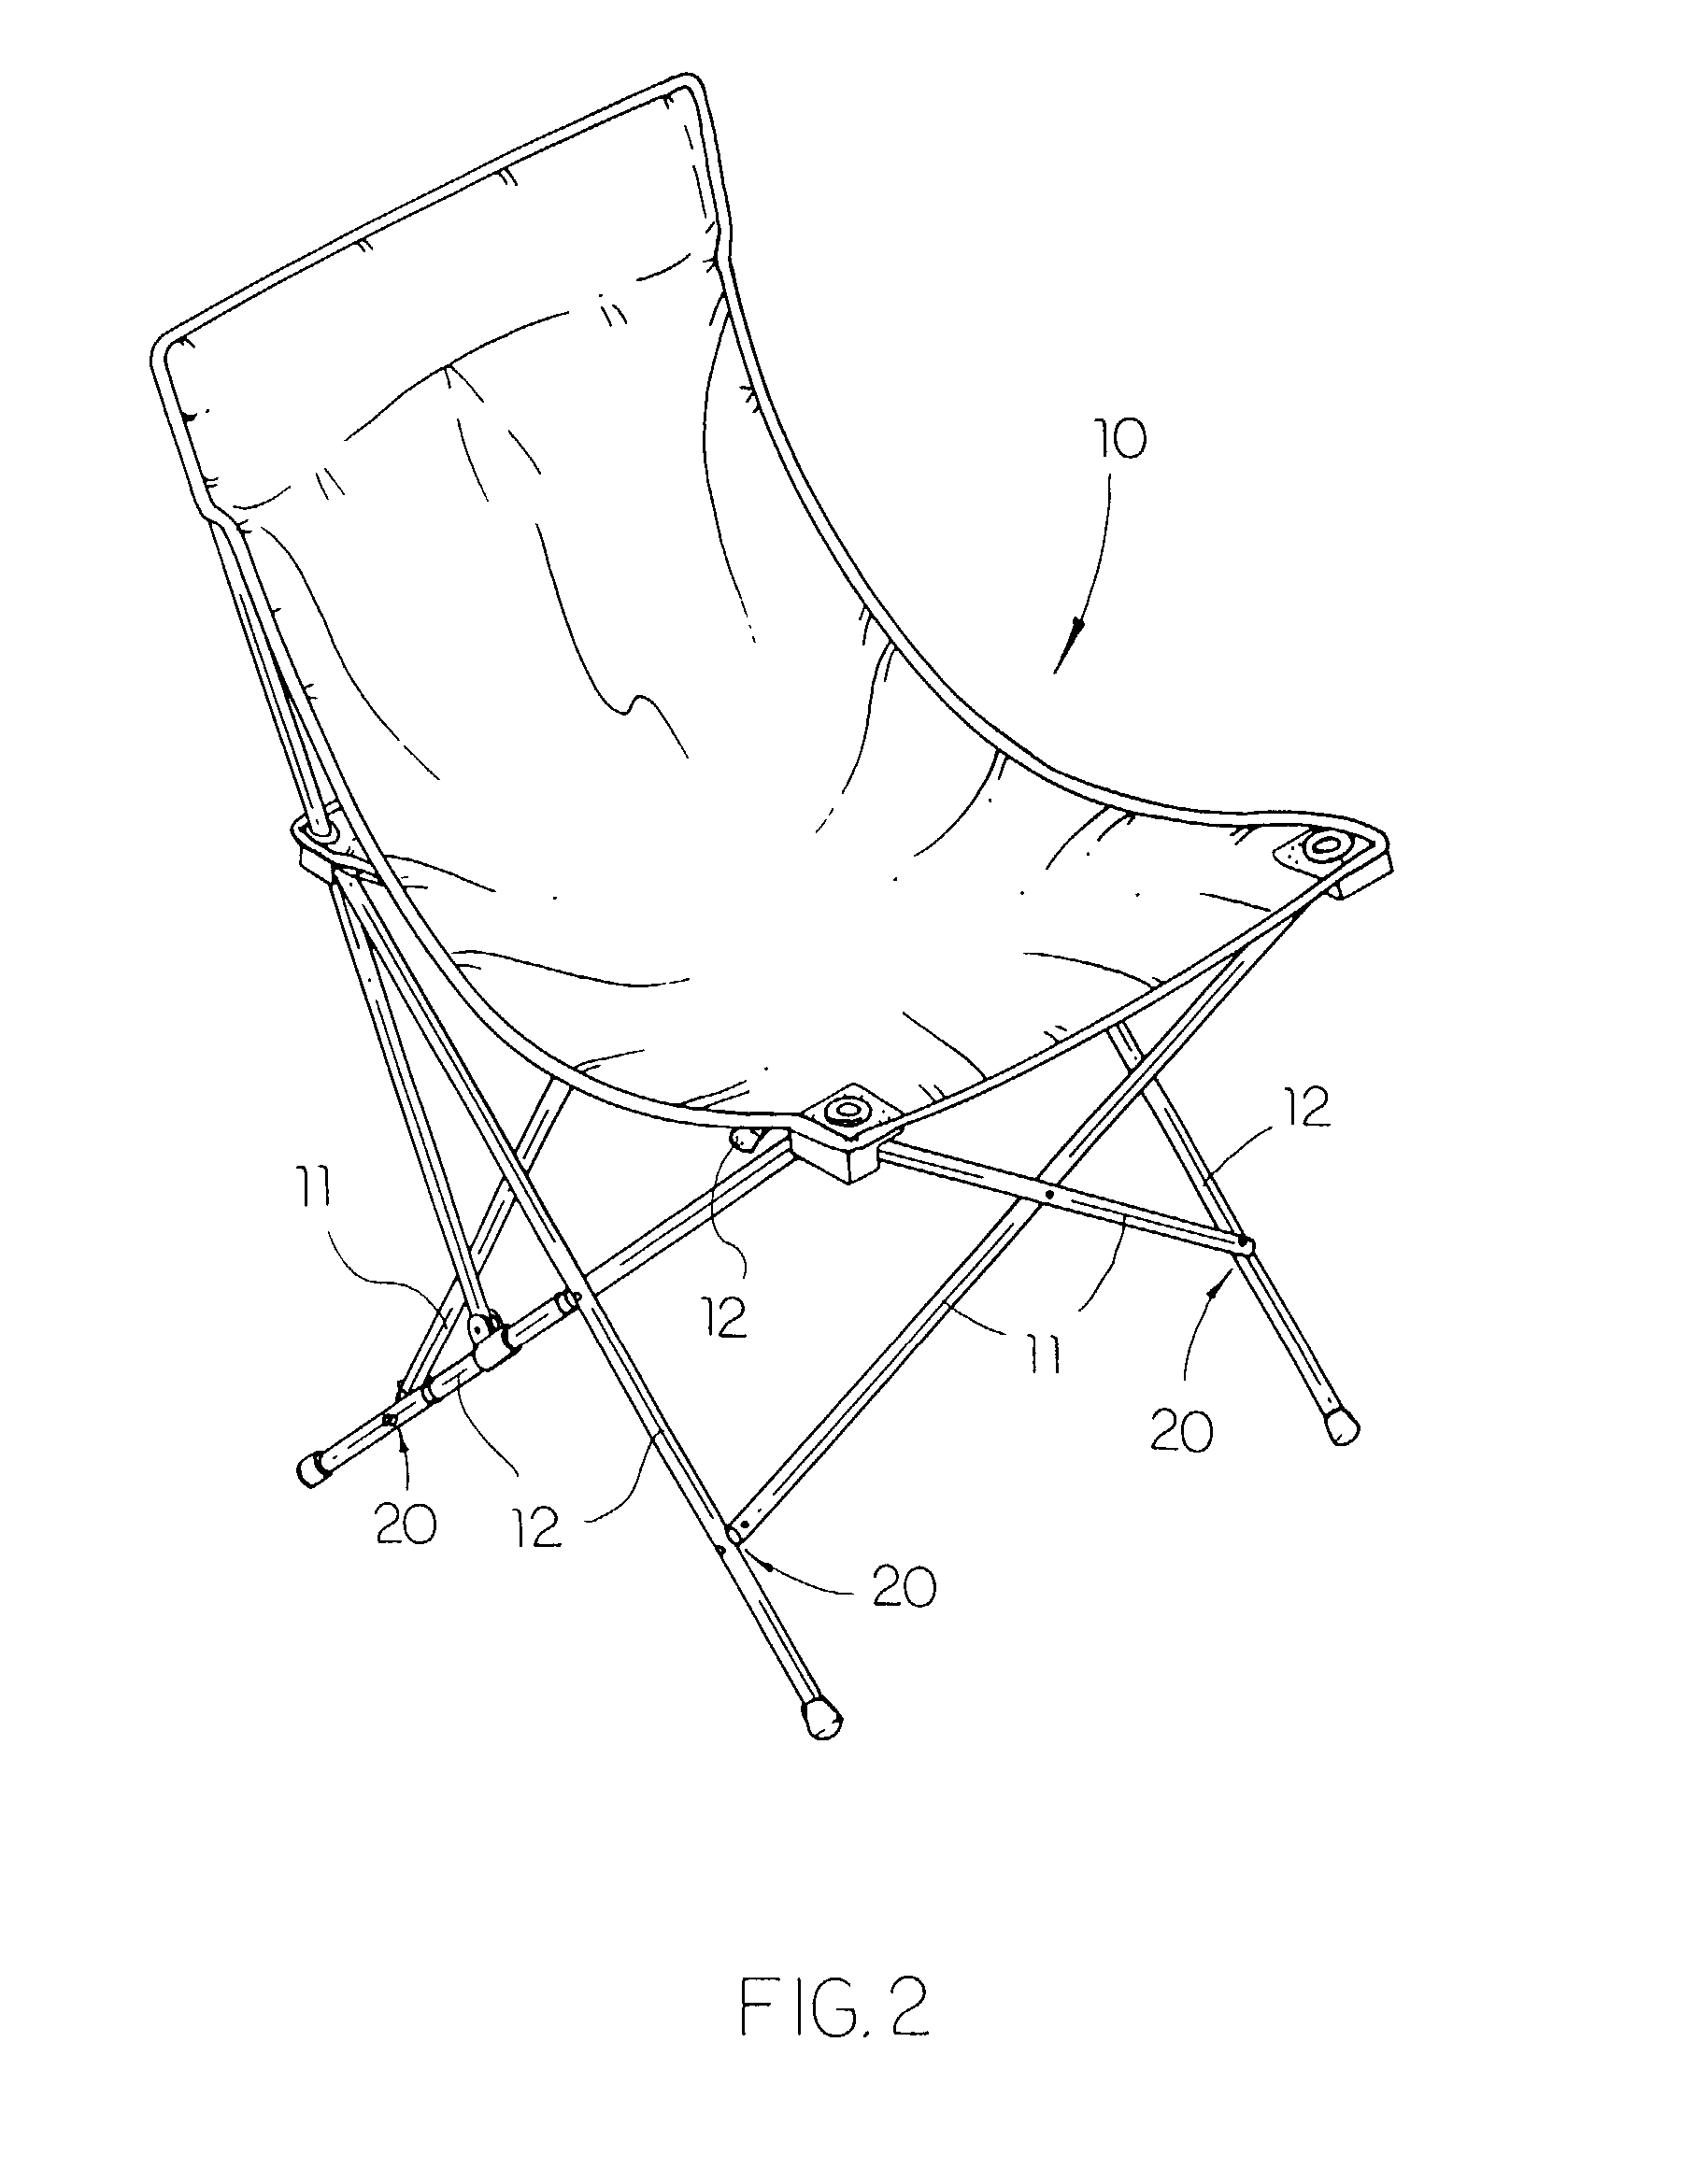 Folding joint arrangement for foldable furniture